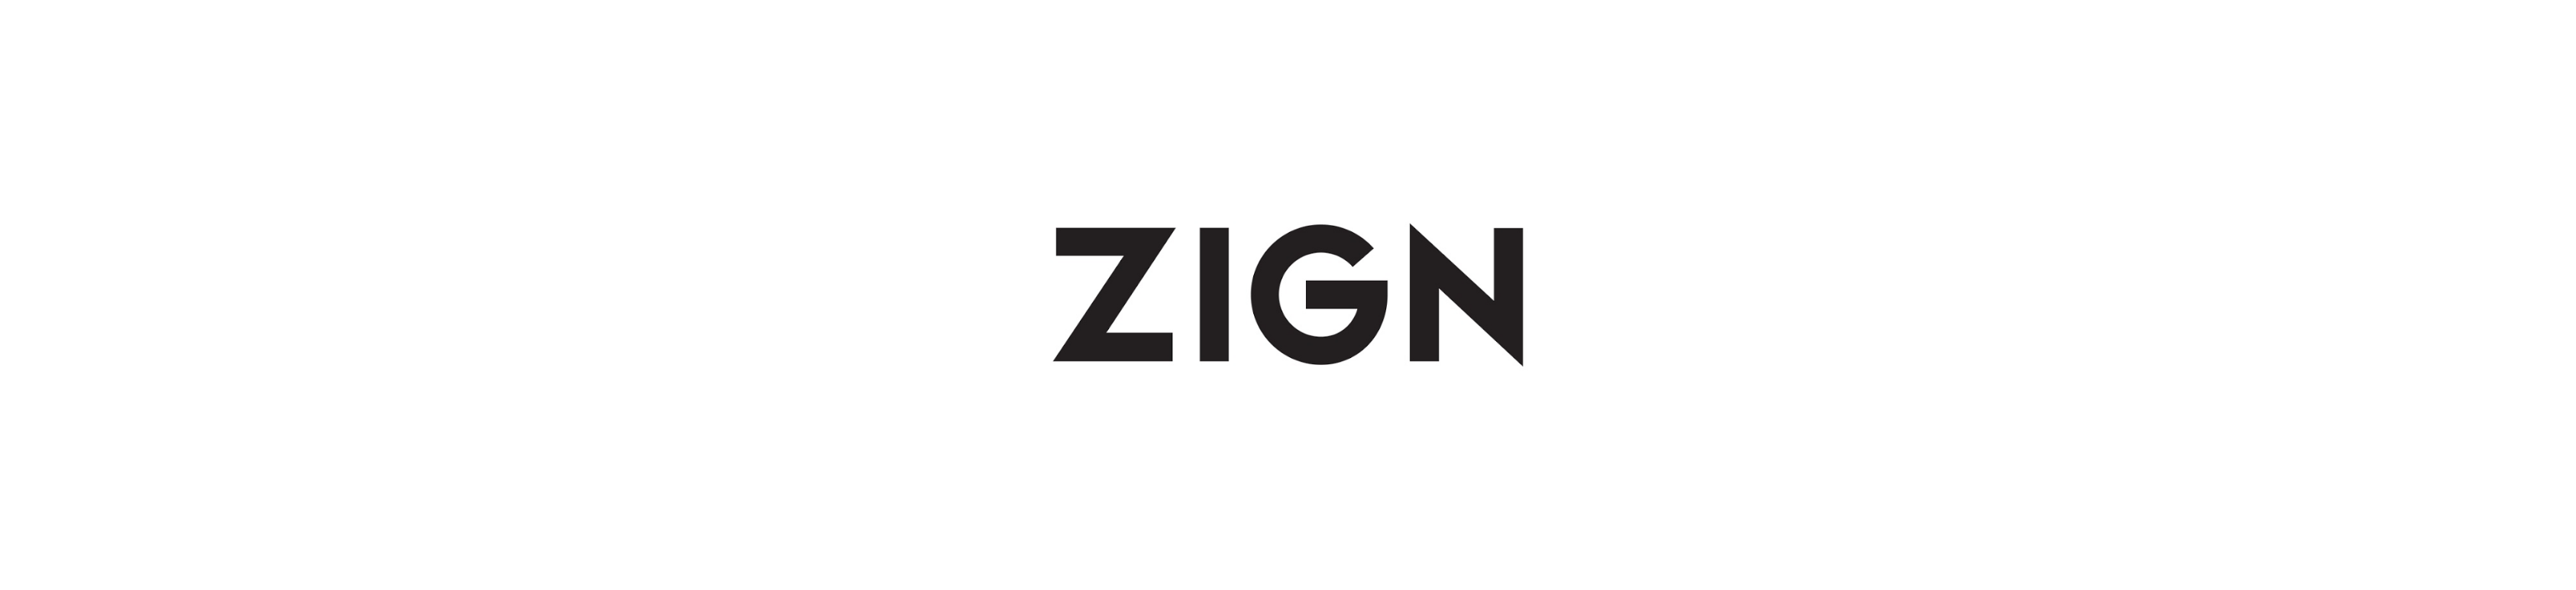 zign logo